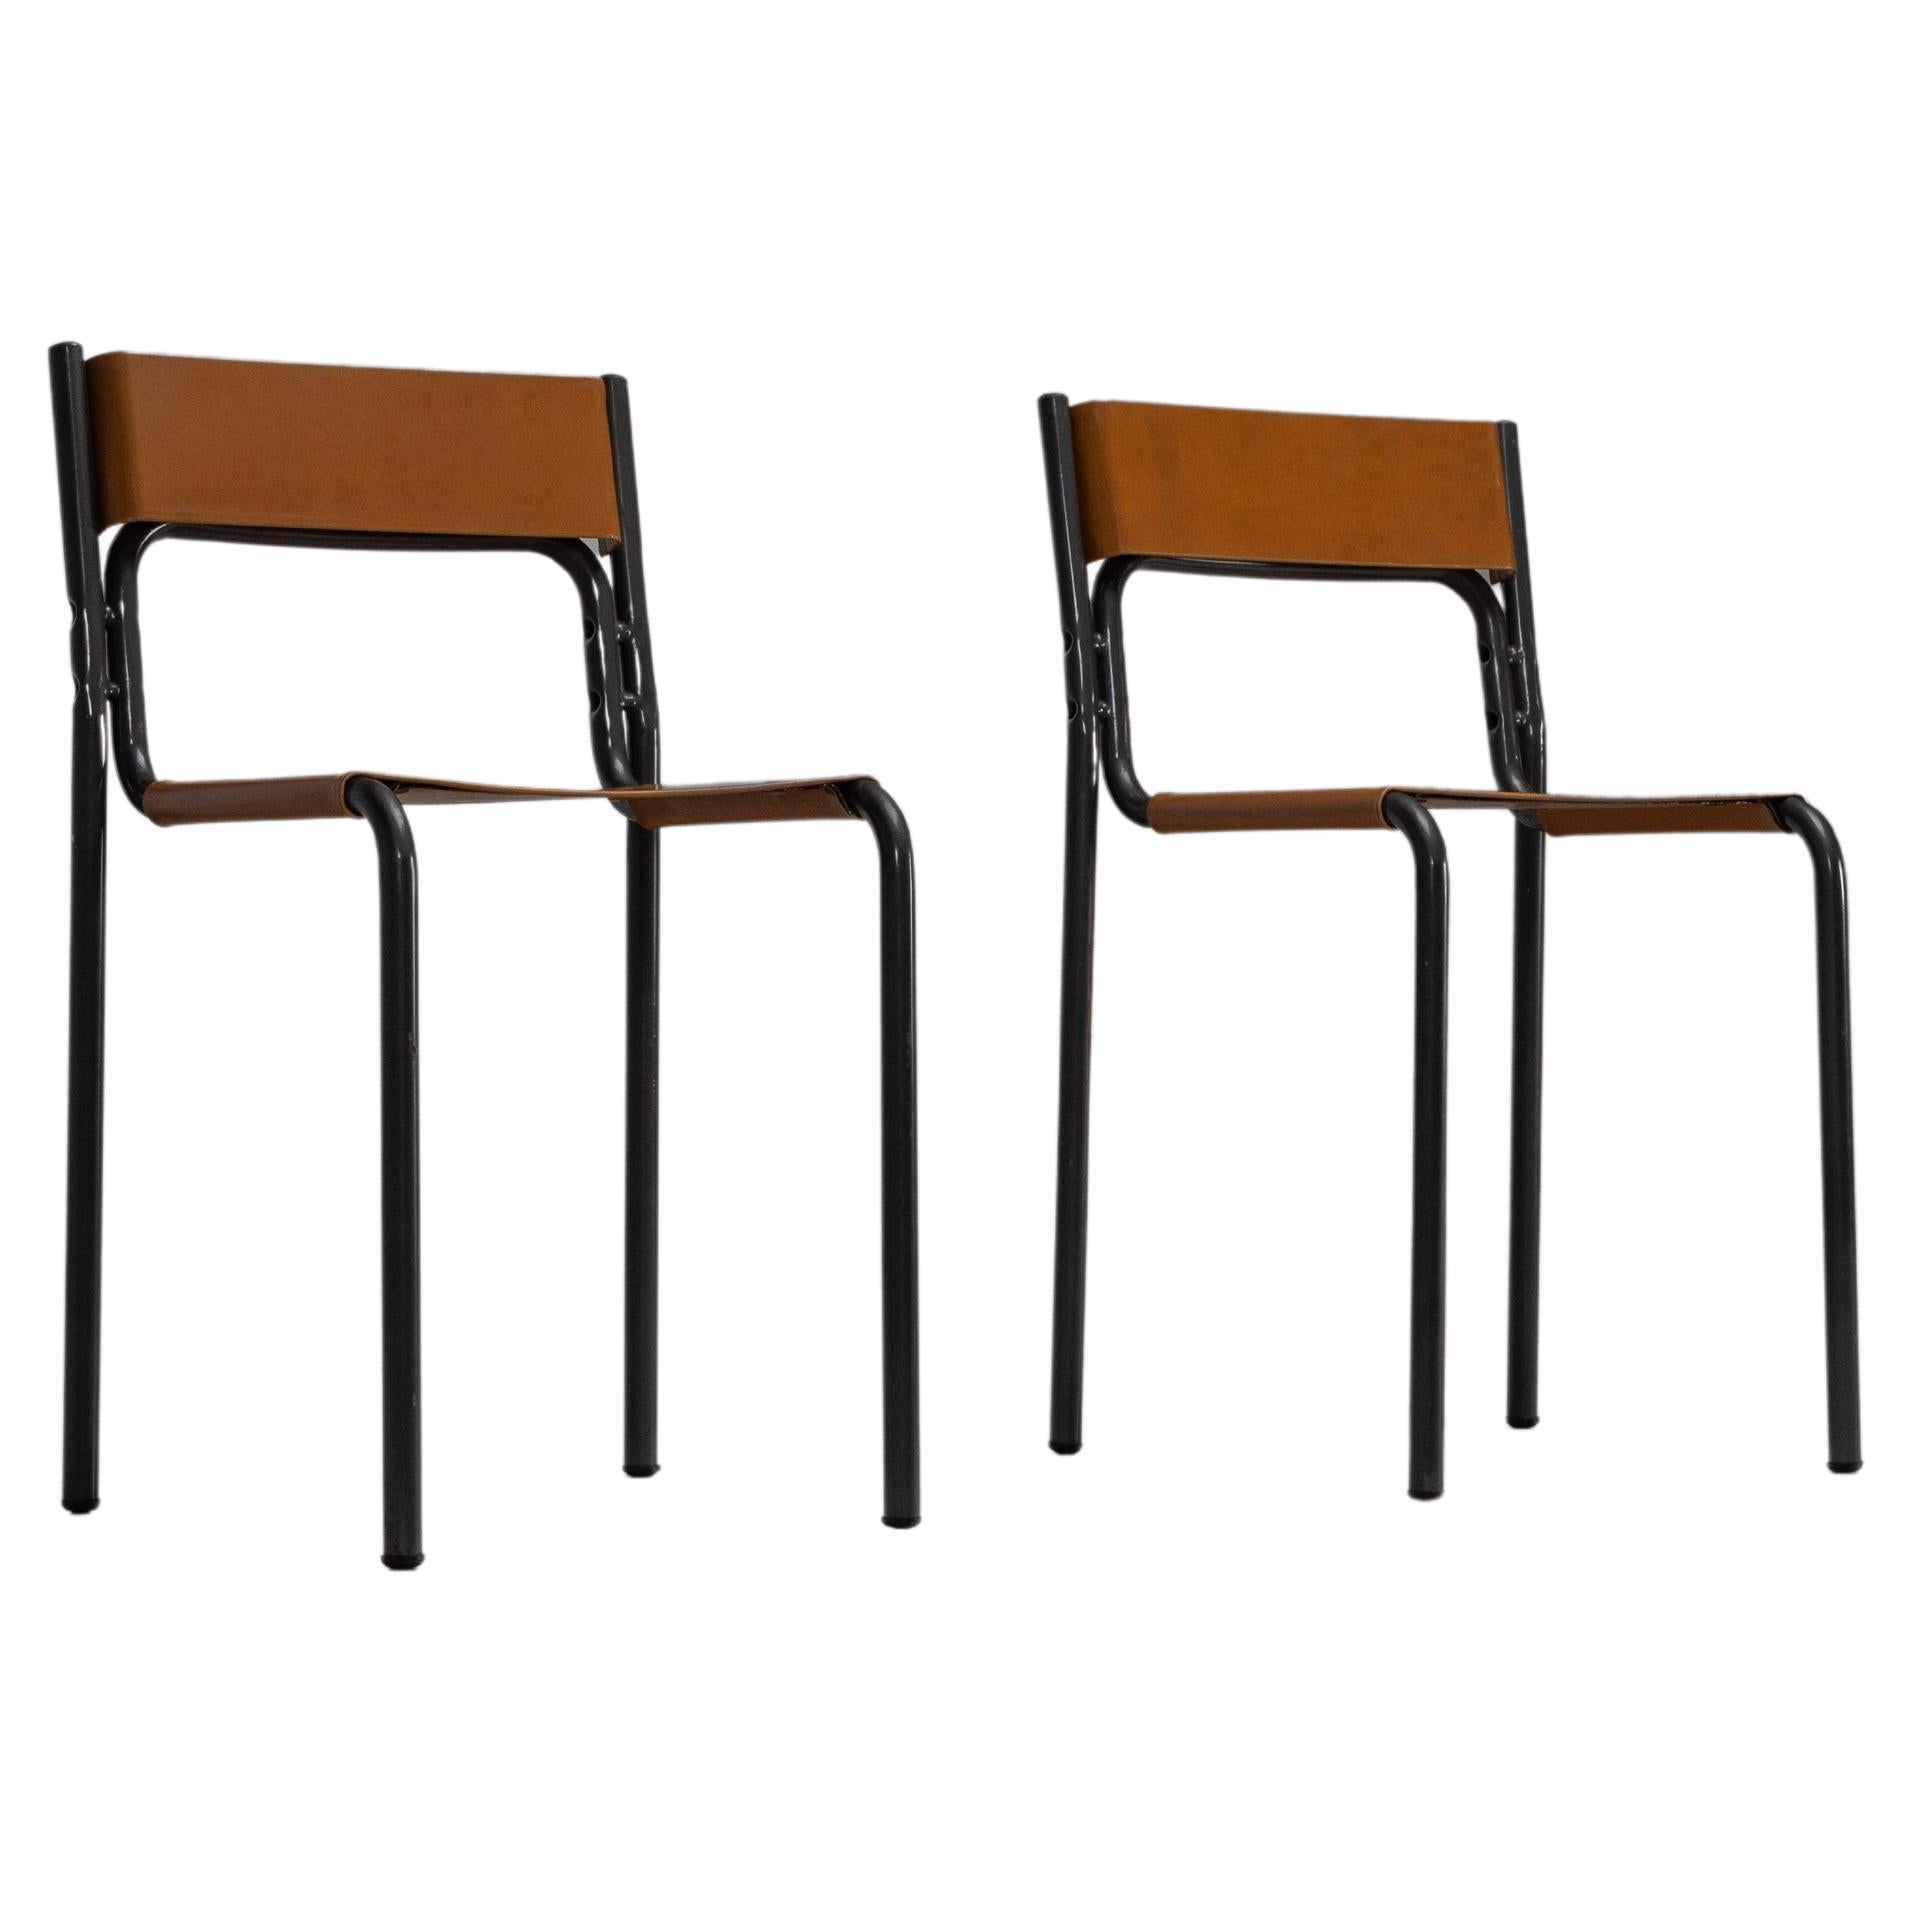 Pier Giacomo Castiglioni Azucena chairs made in Italy 1959 For Sale